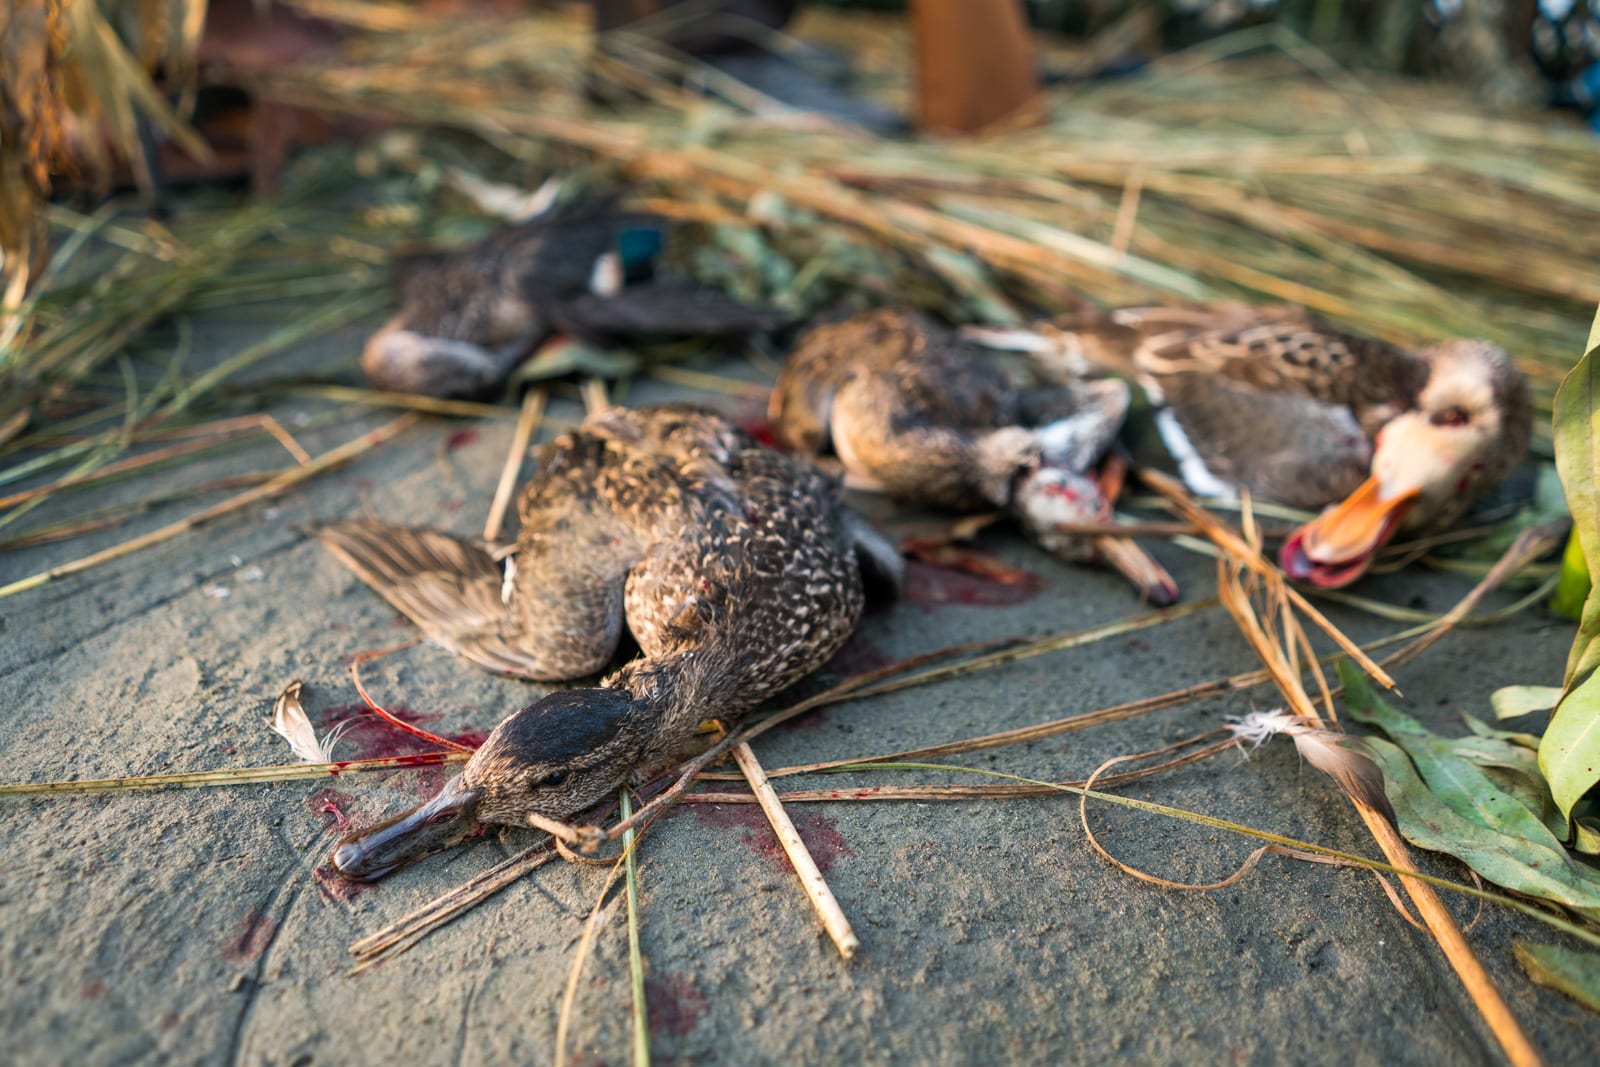 The Pashtuns of Peshwar, Pakistan - Dead ducks in Pakistan - Lost With Purpose travel blog